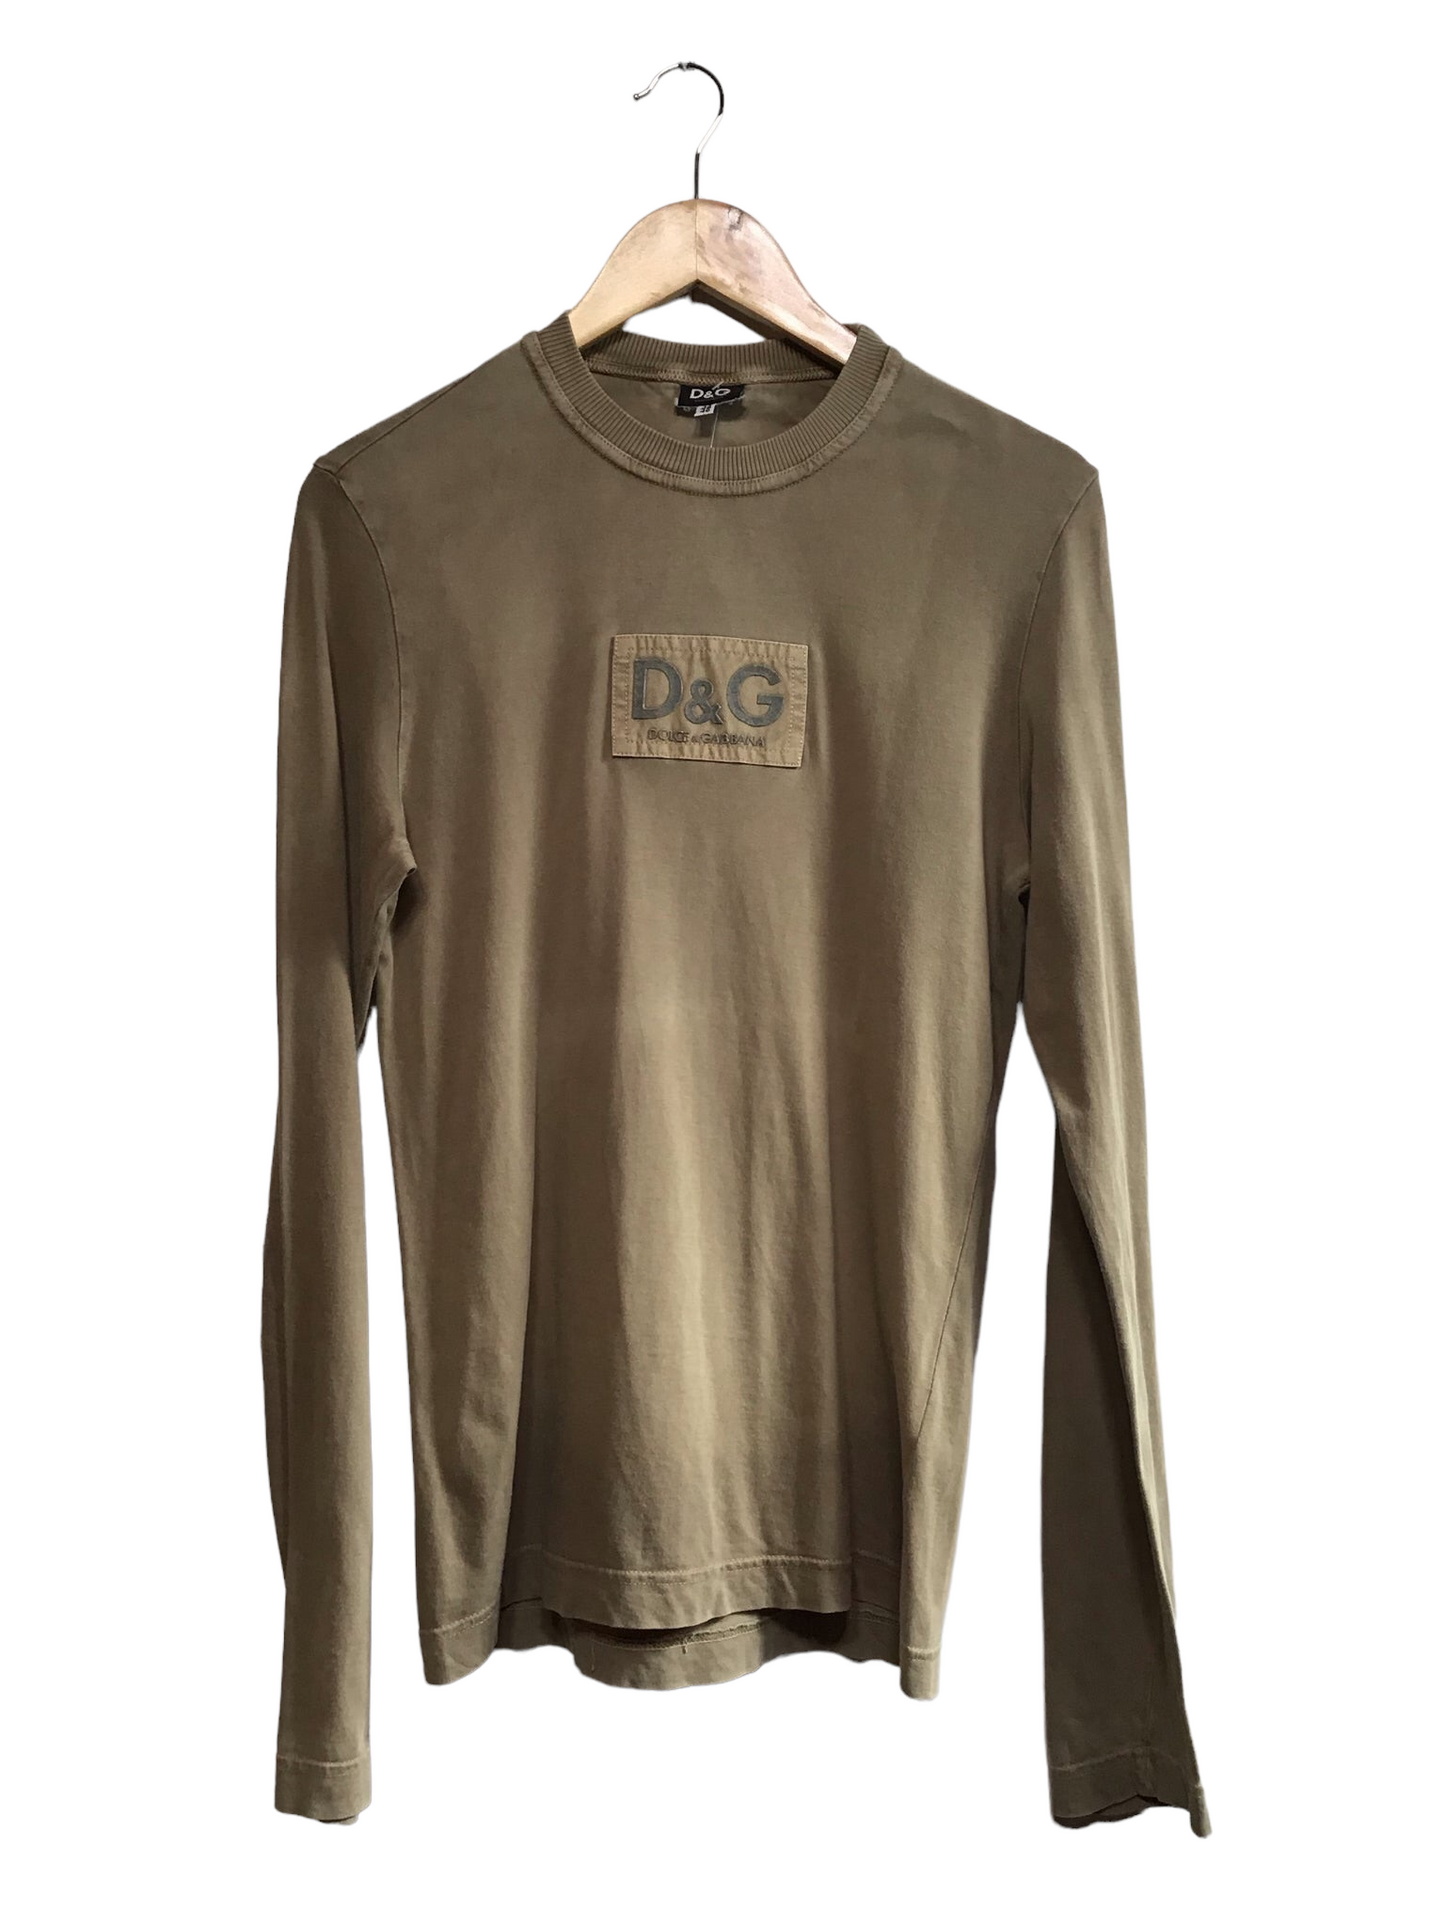 D&G Long Sleeve Top (Size M)